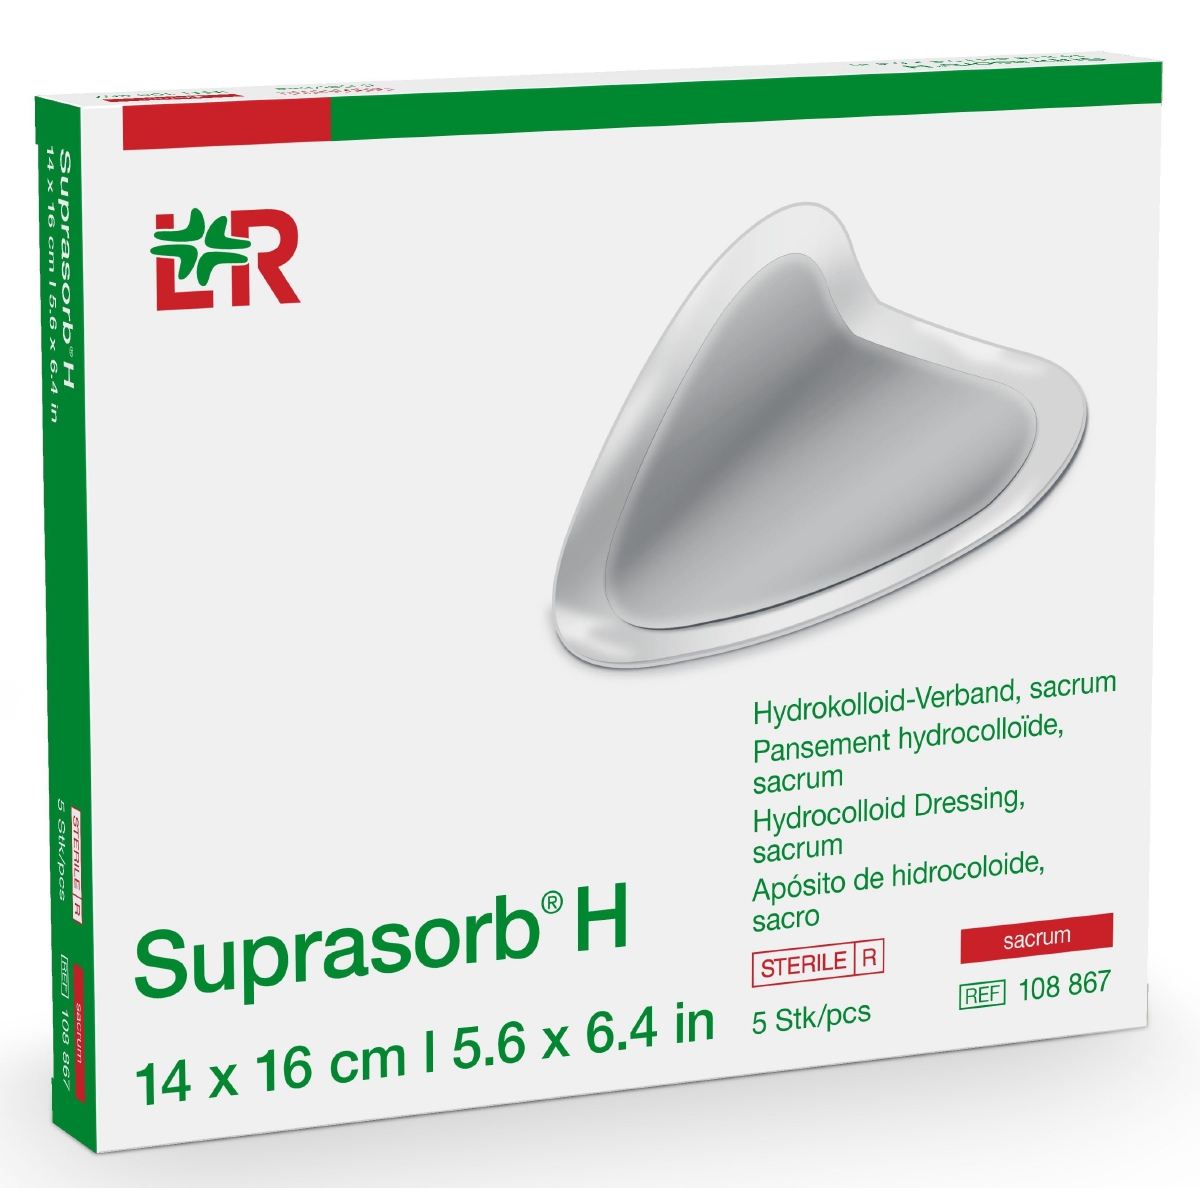 Suprasorb H Hydrokolloid-Verband steril border 14x14cm 5 Stk